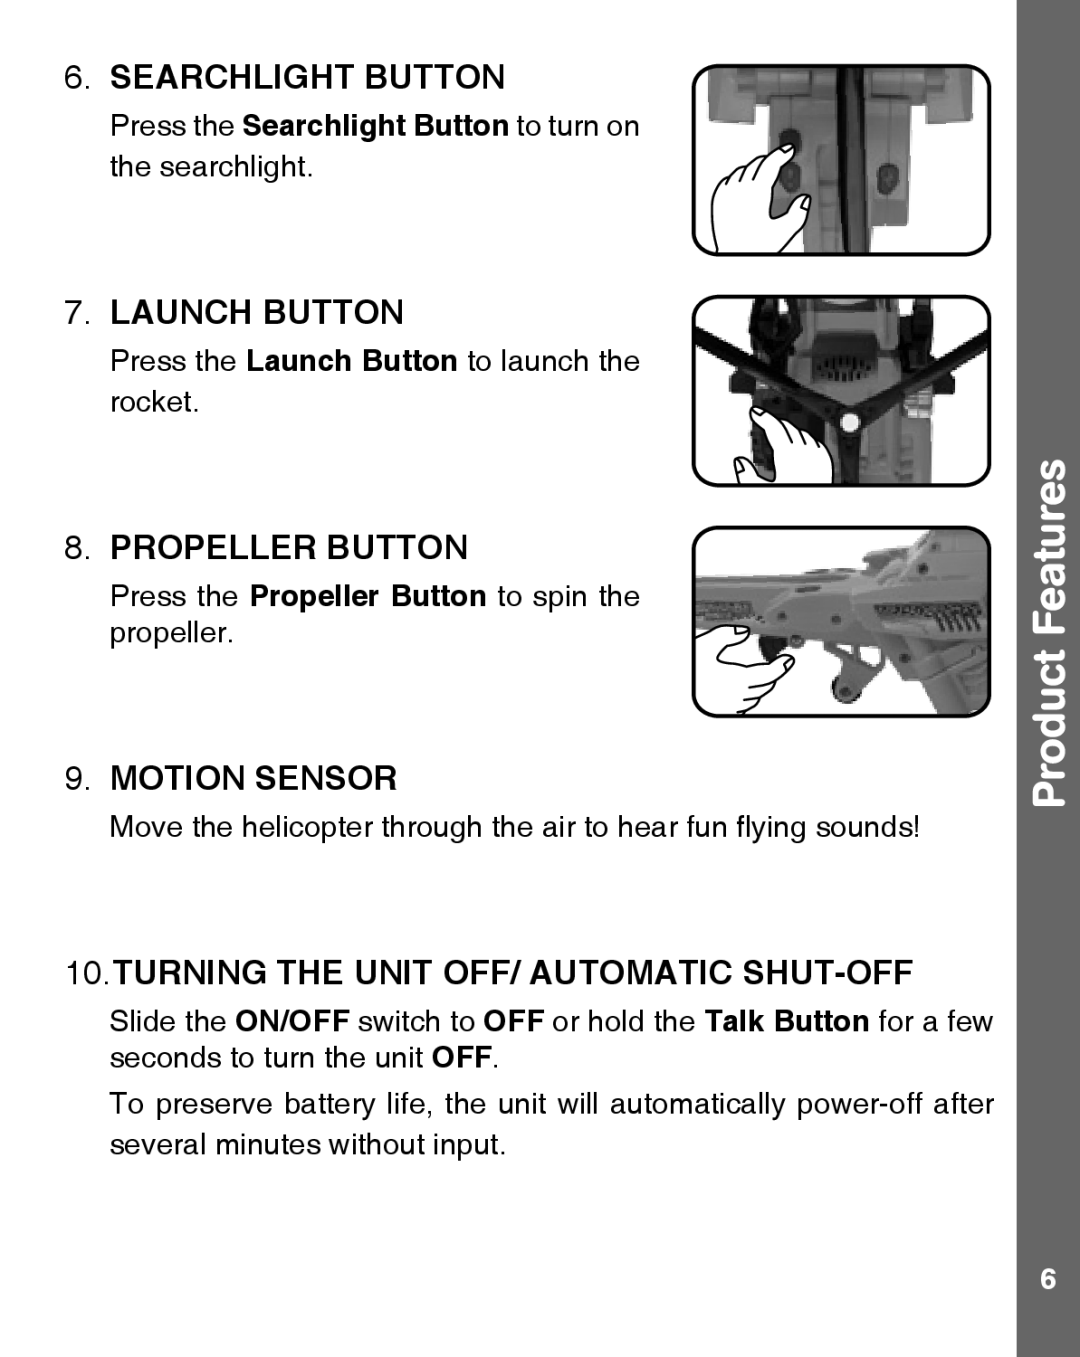 VTech 91-009642-000 user manual Product Features, Searchlight Button, Launch Button, Propeller Button, Motion Sensor 